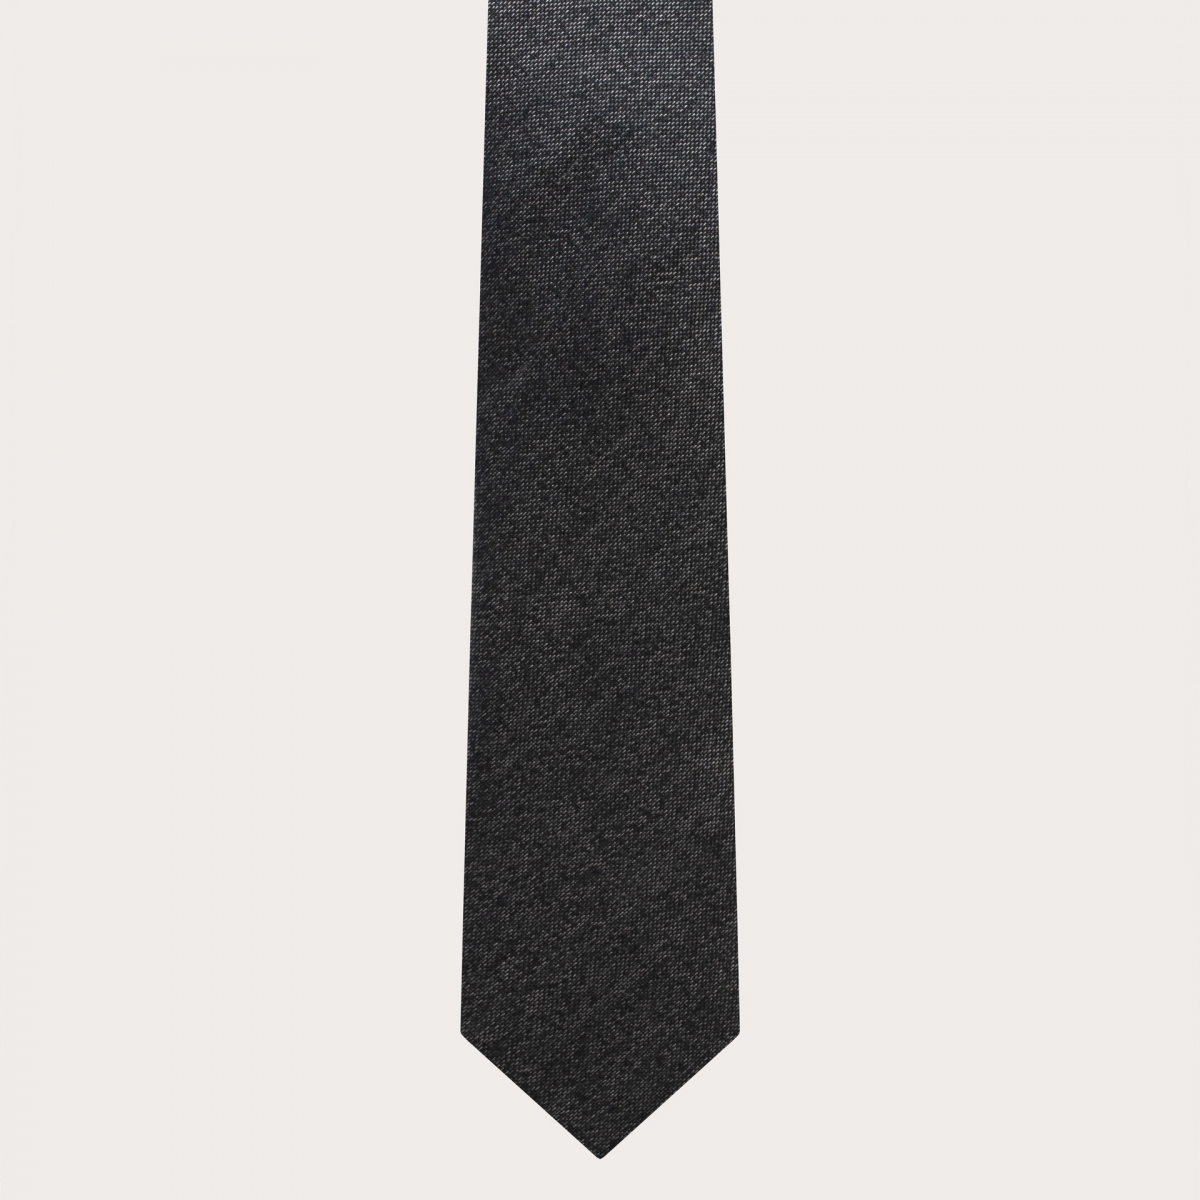 BRUCLE Refined set of melange grey suspenders with matching necktie in silk